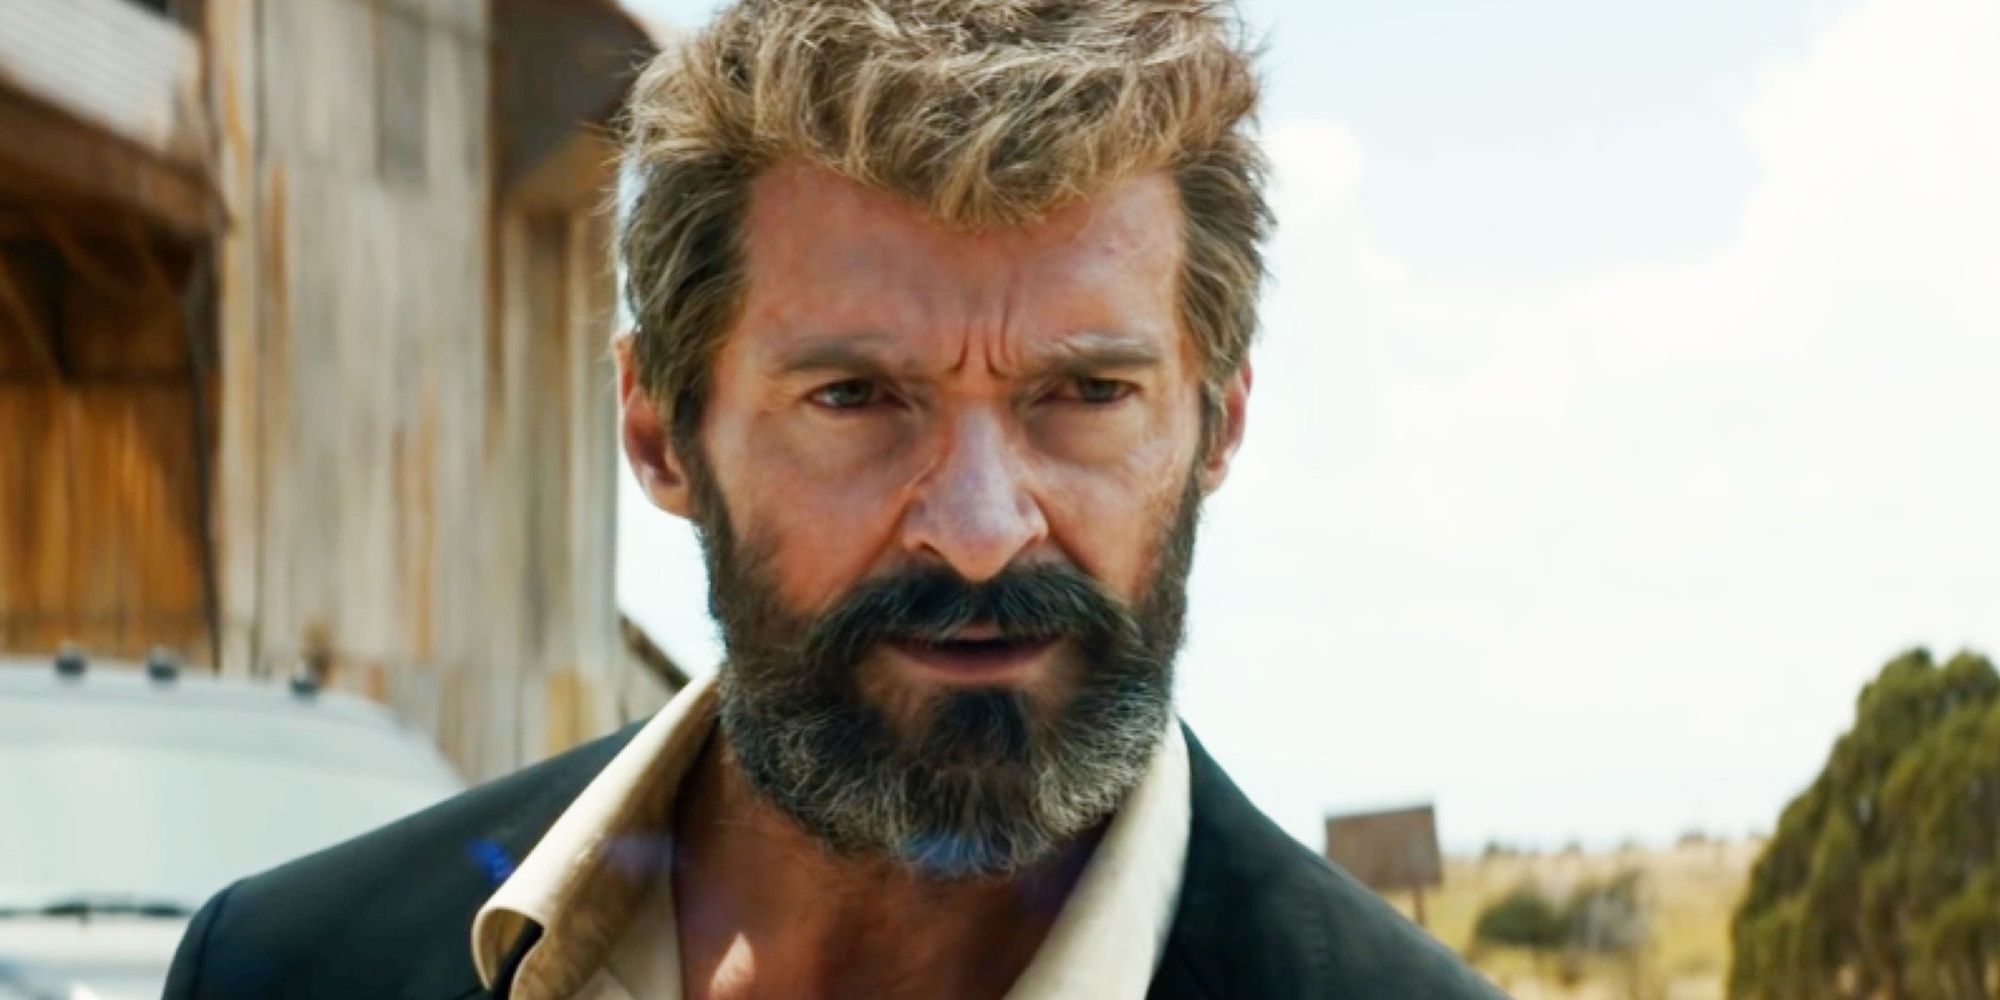 Hugh Jackman as Wolverine in Logan.